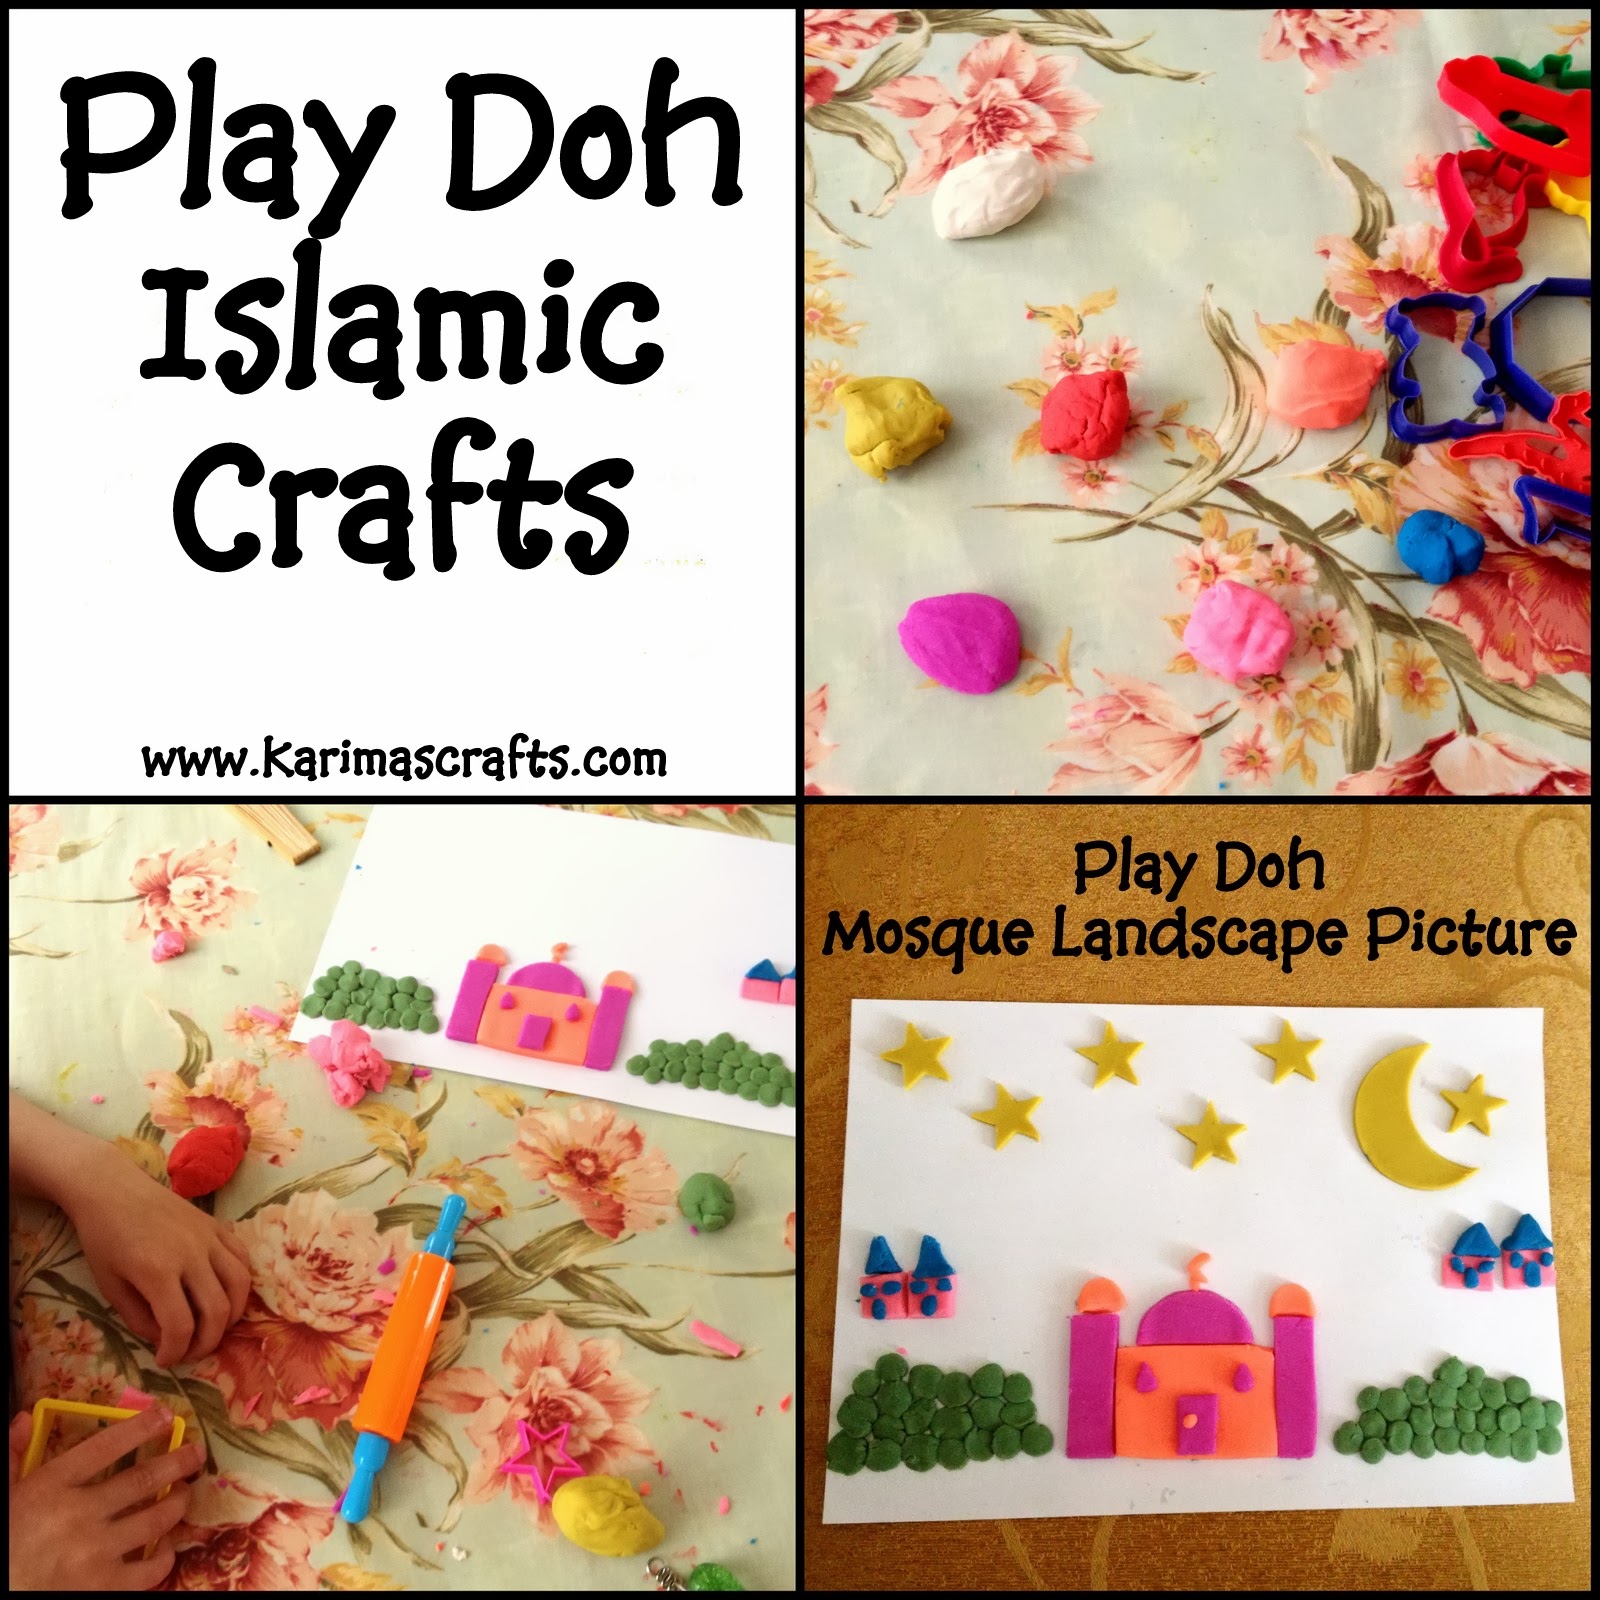 games crafts lego jenga play-doh minecraft ramadan crafts islam muslim